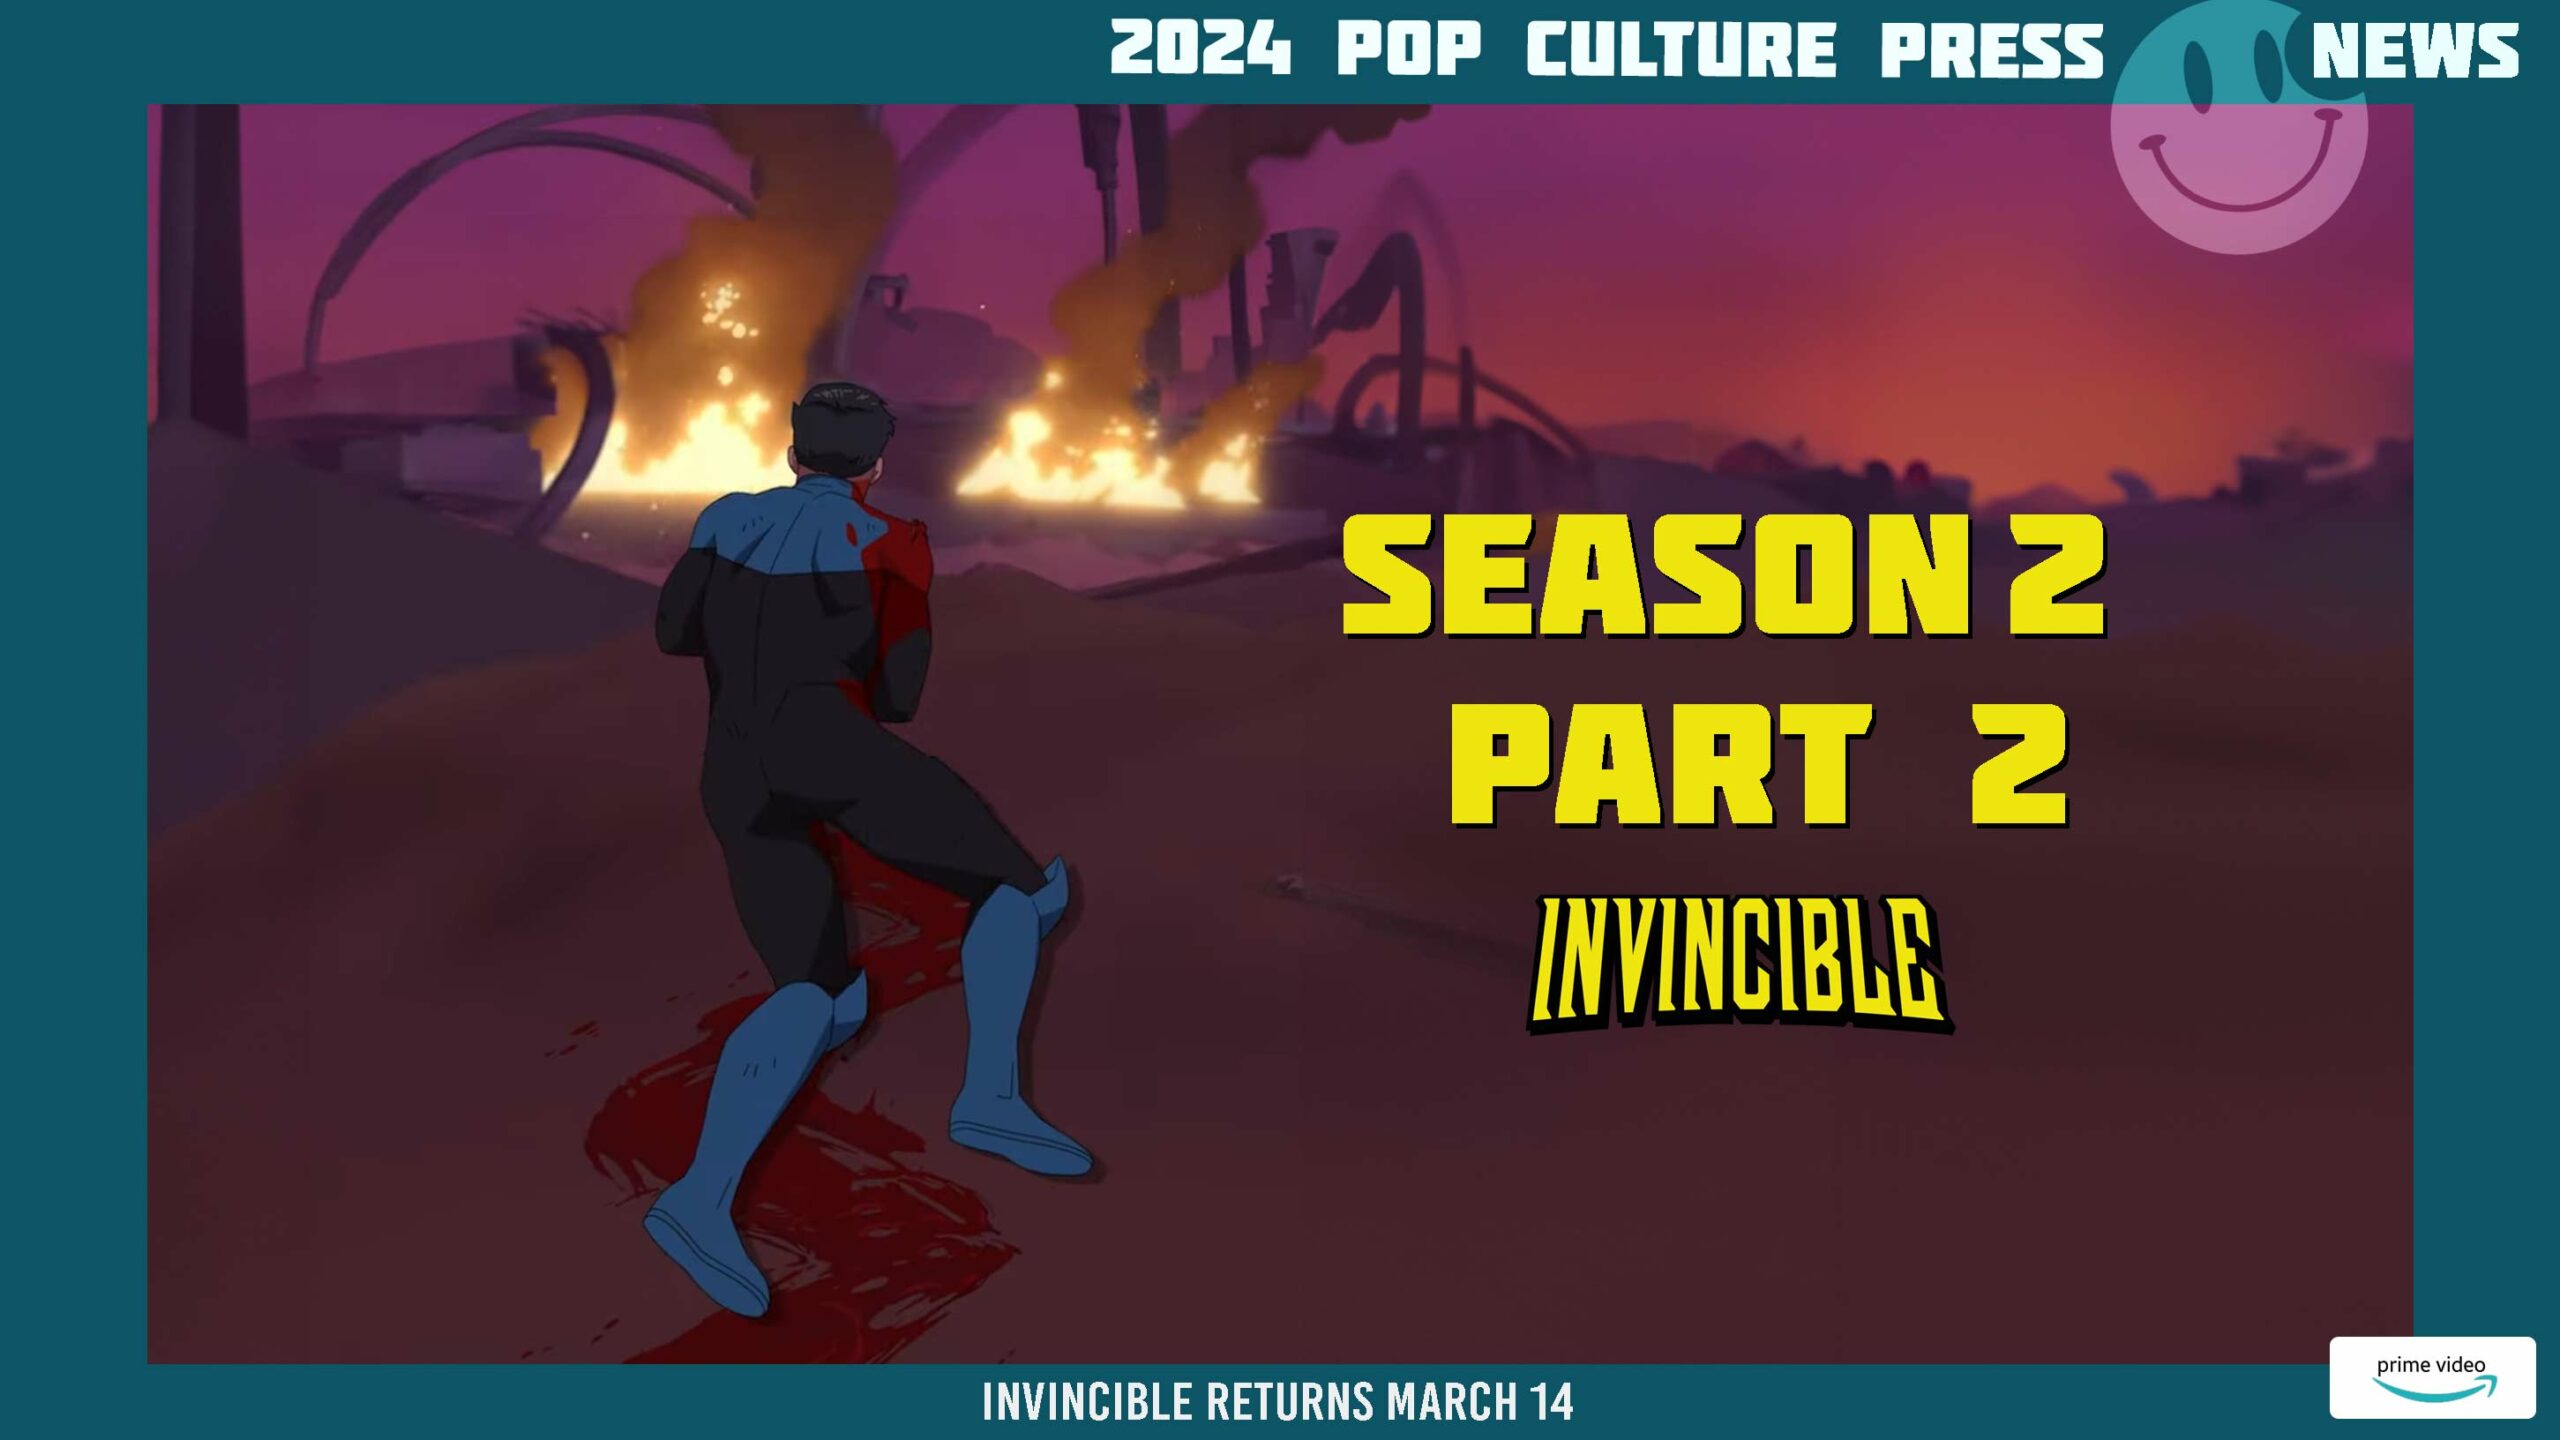 Amazon Studios announces the date Season 2, Part 2 of Invincible.